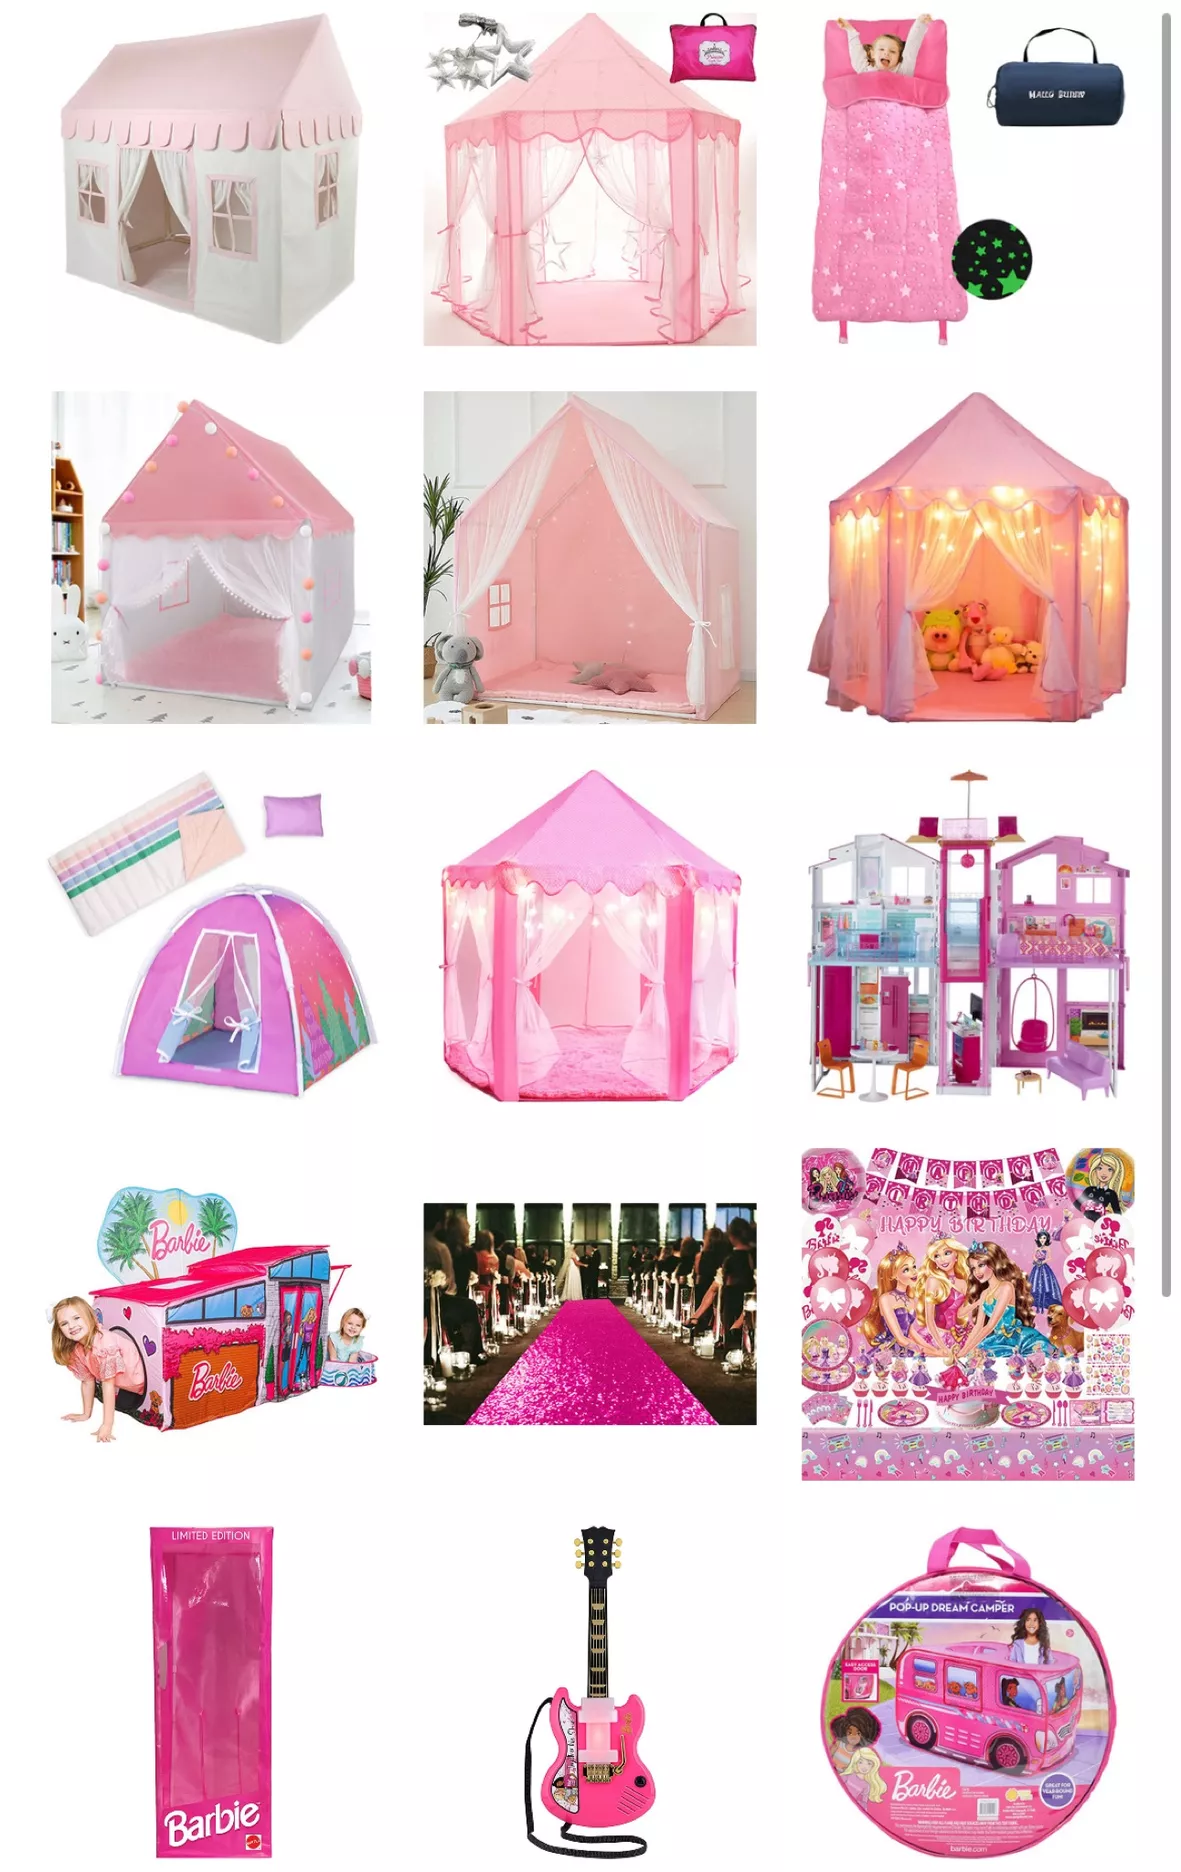  Barbie Camper Pop Up Play Tent – Large Princess Castle